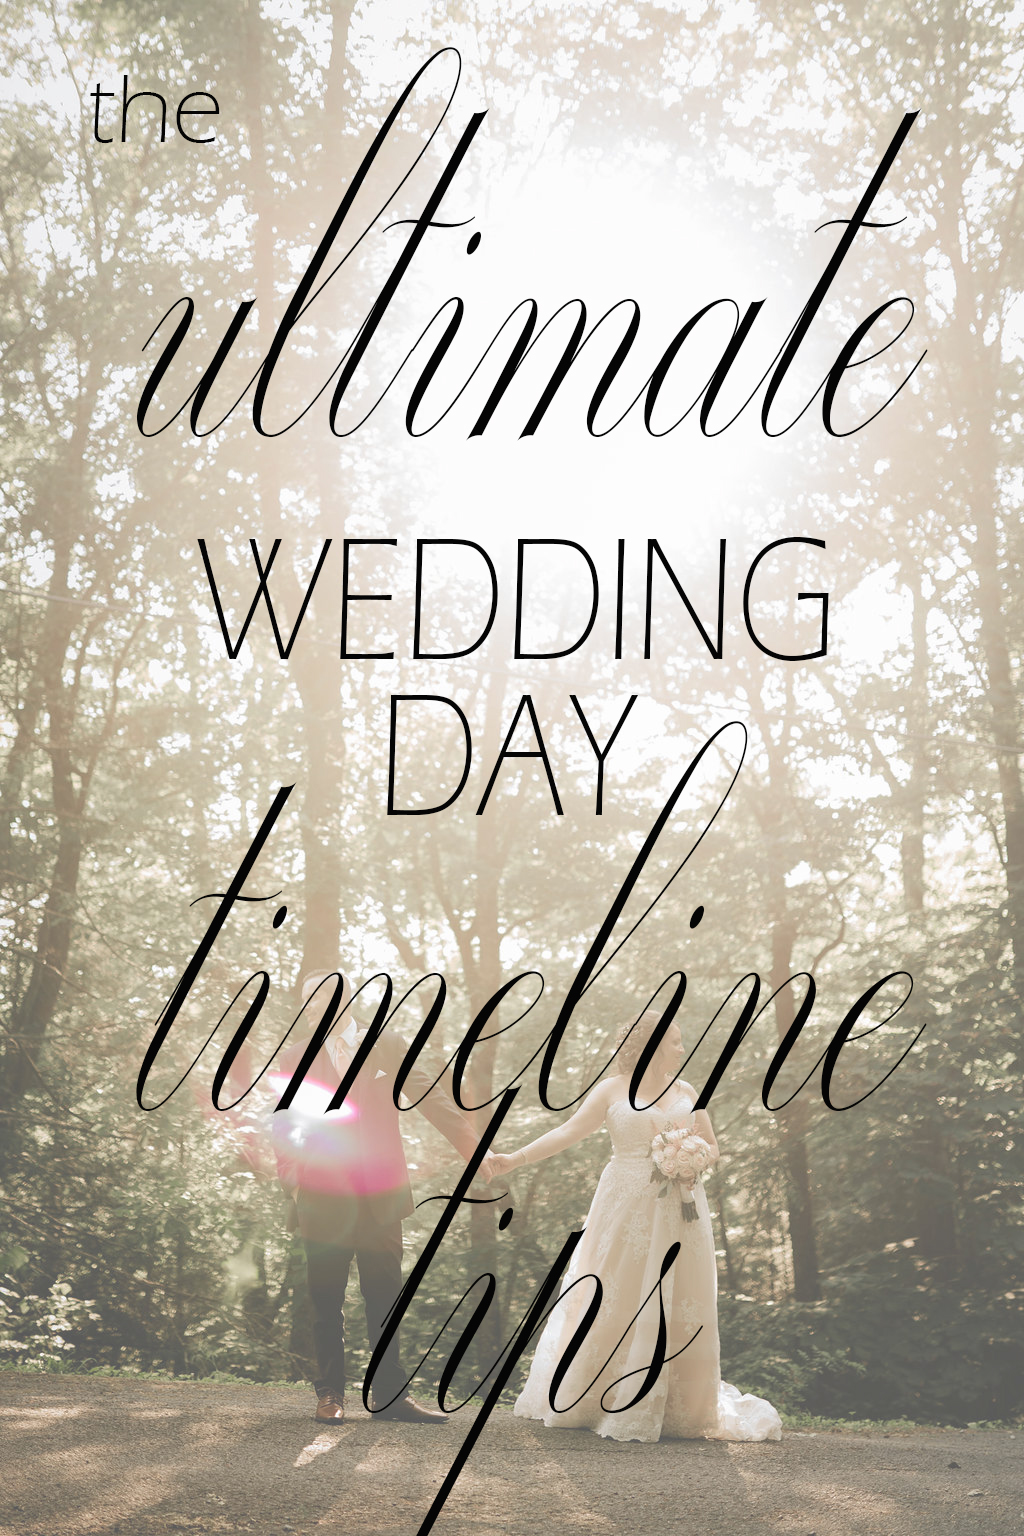 wedding day timeline tips